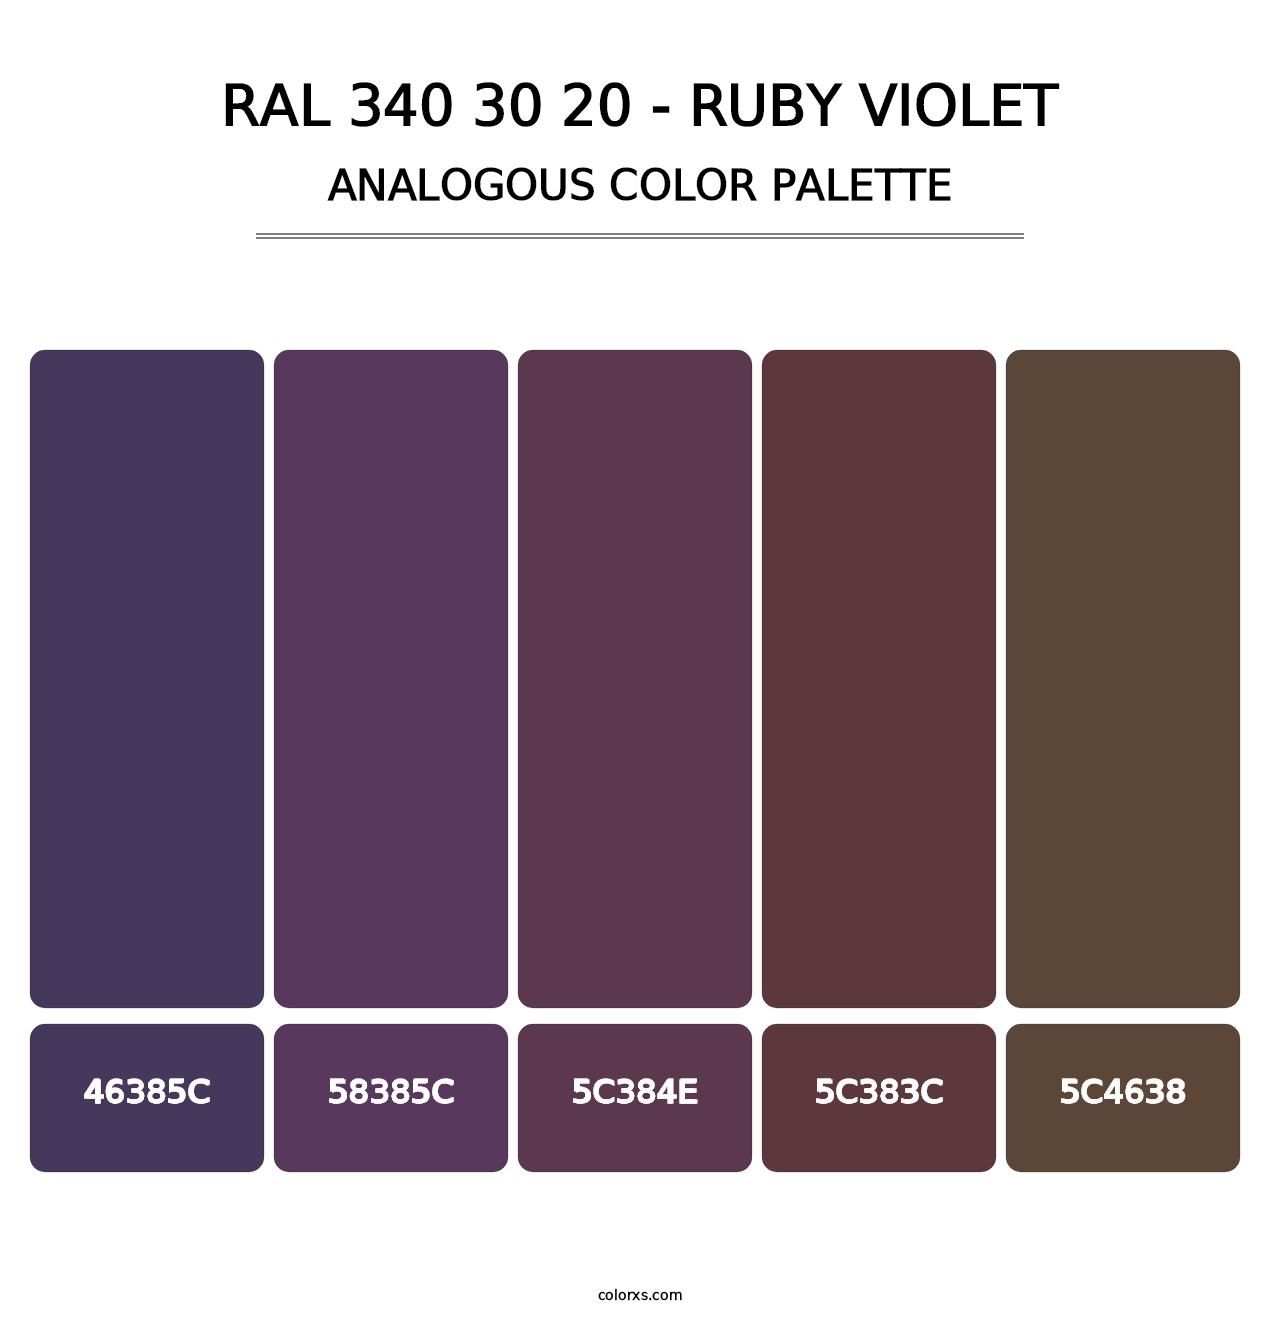 RAL 340 30 20 - Ruby Violet - Analogous Color Palette